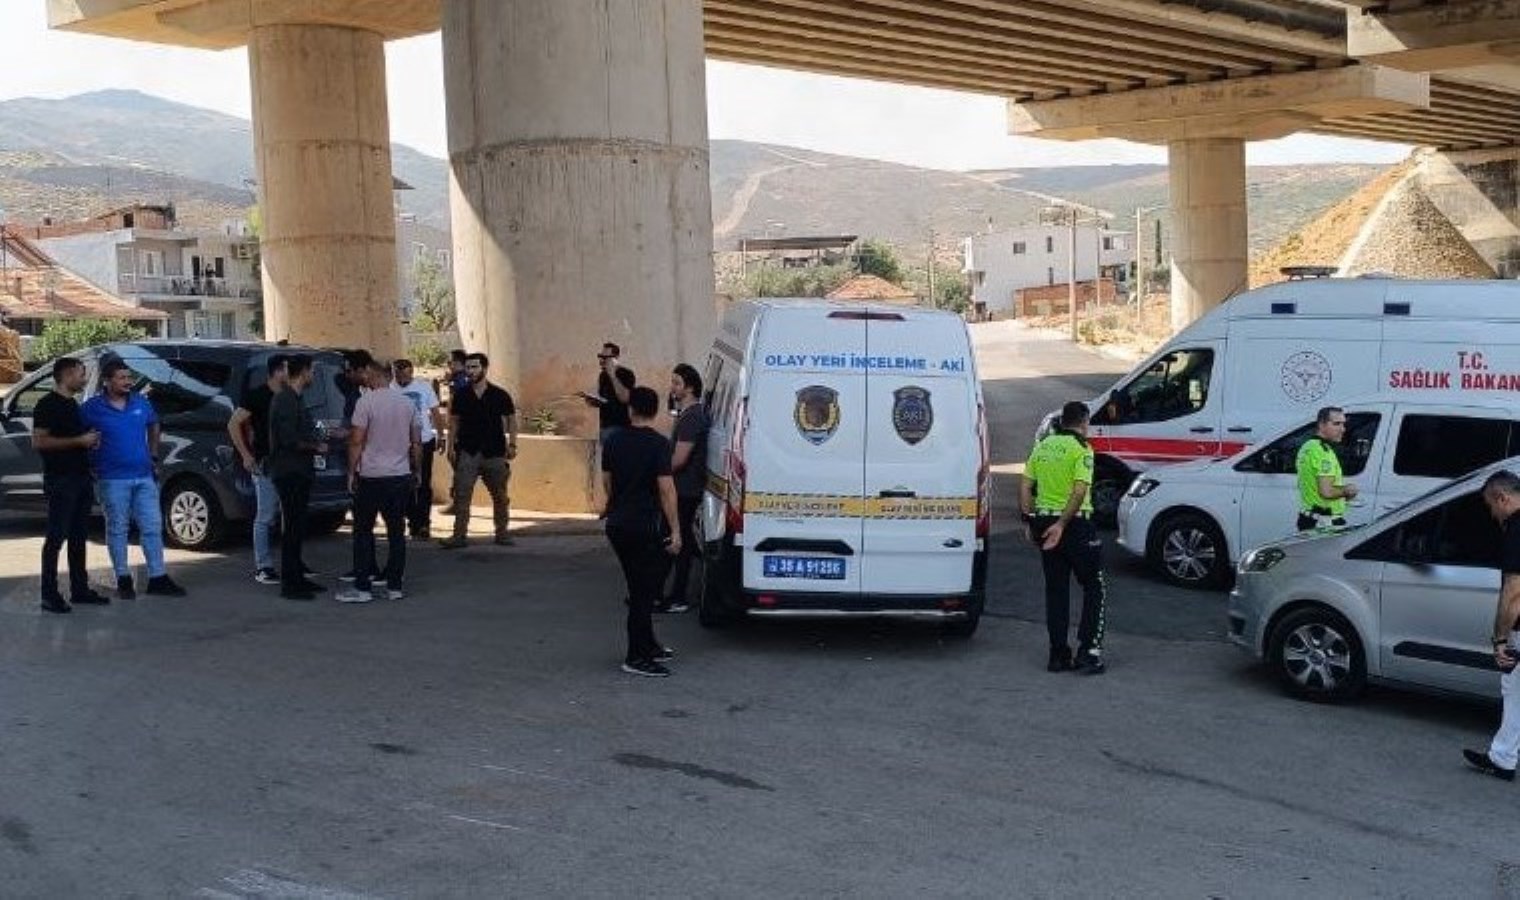 Gaziantep’ten İzmir’e kaçmışlardı: Çift, cinayete kurban gitti